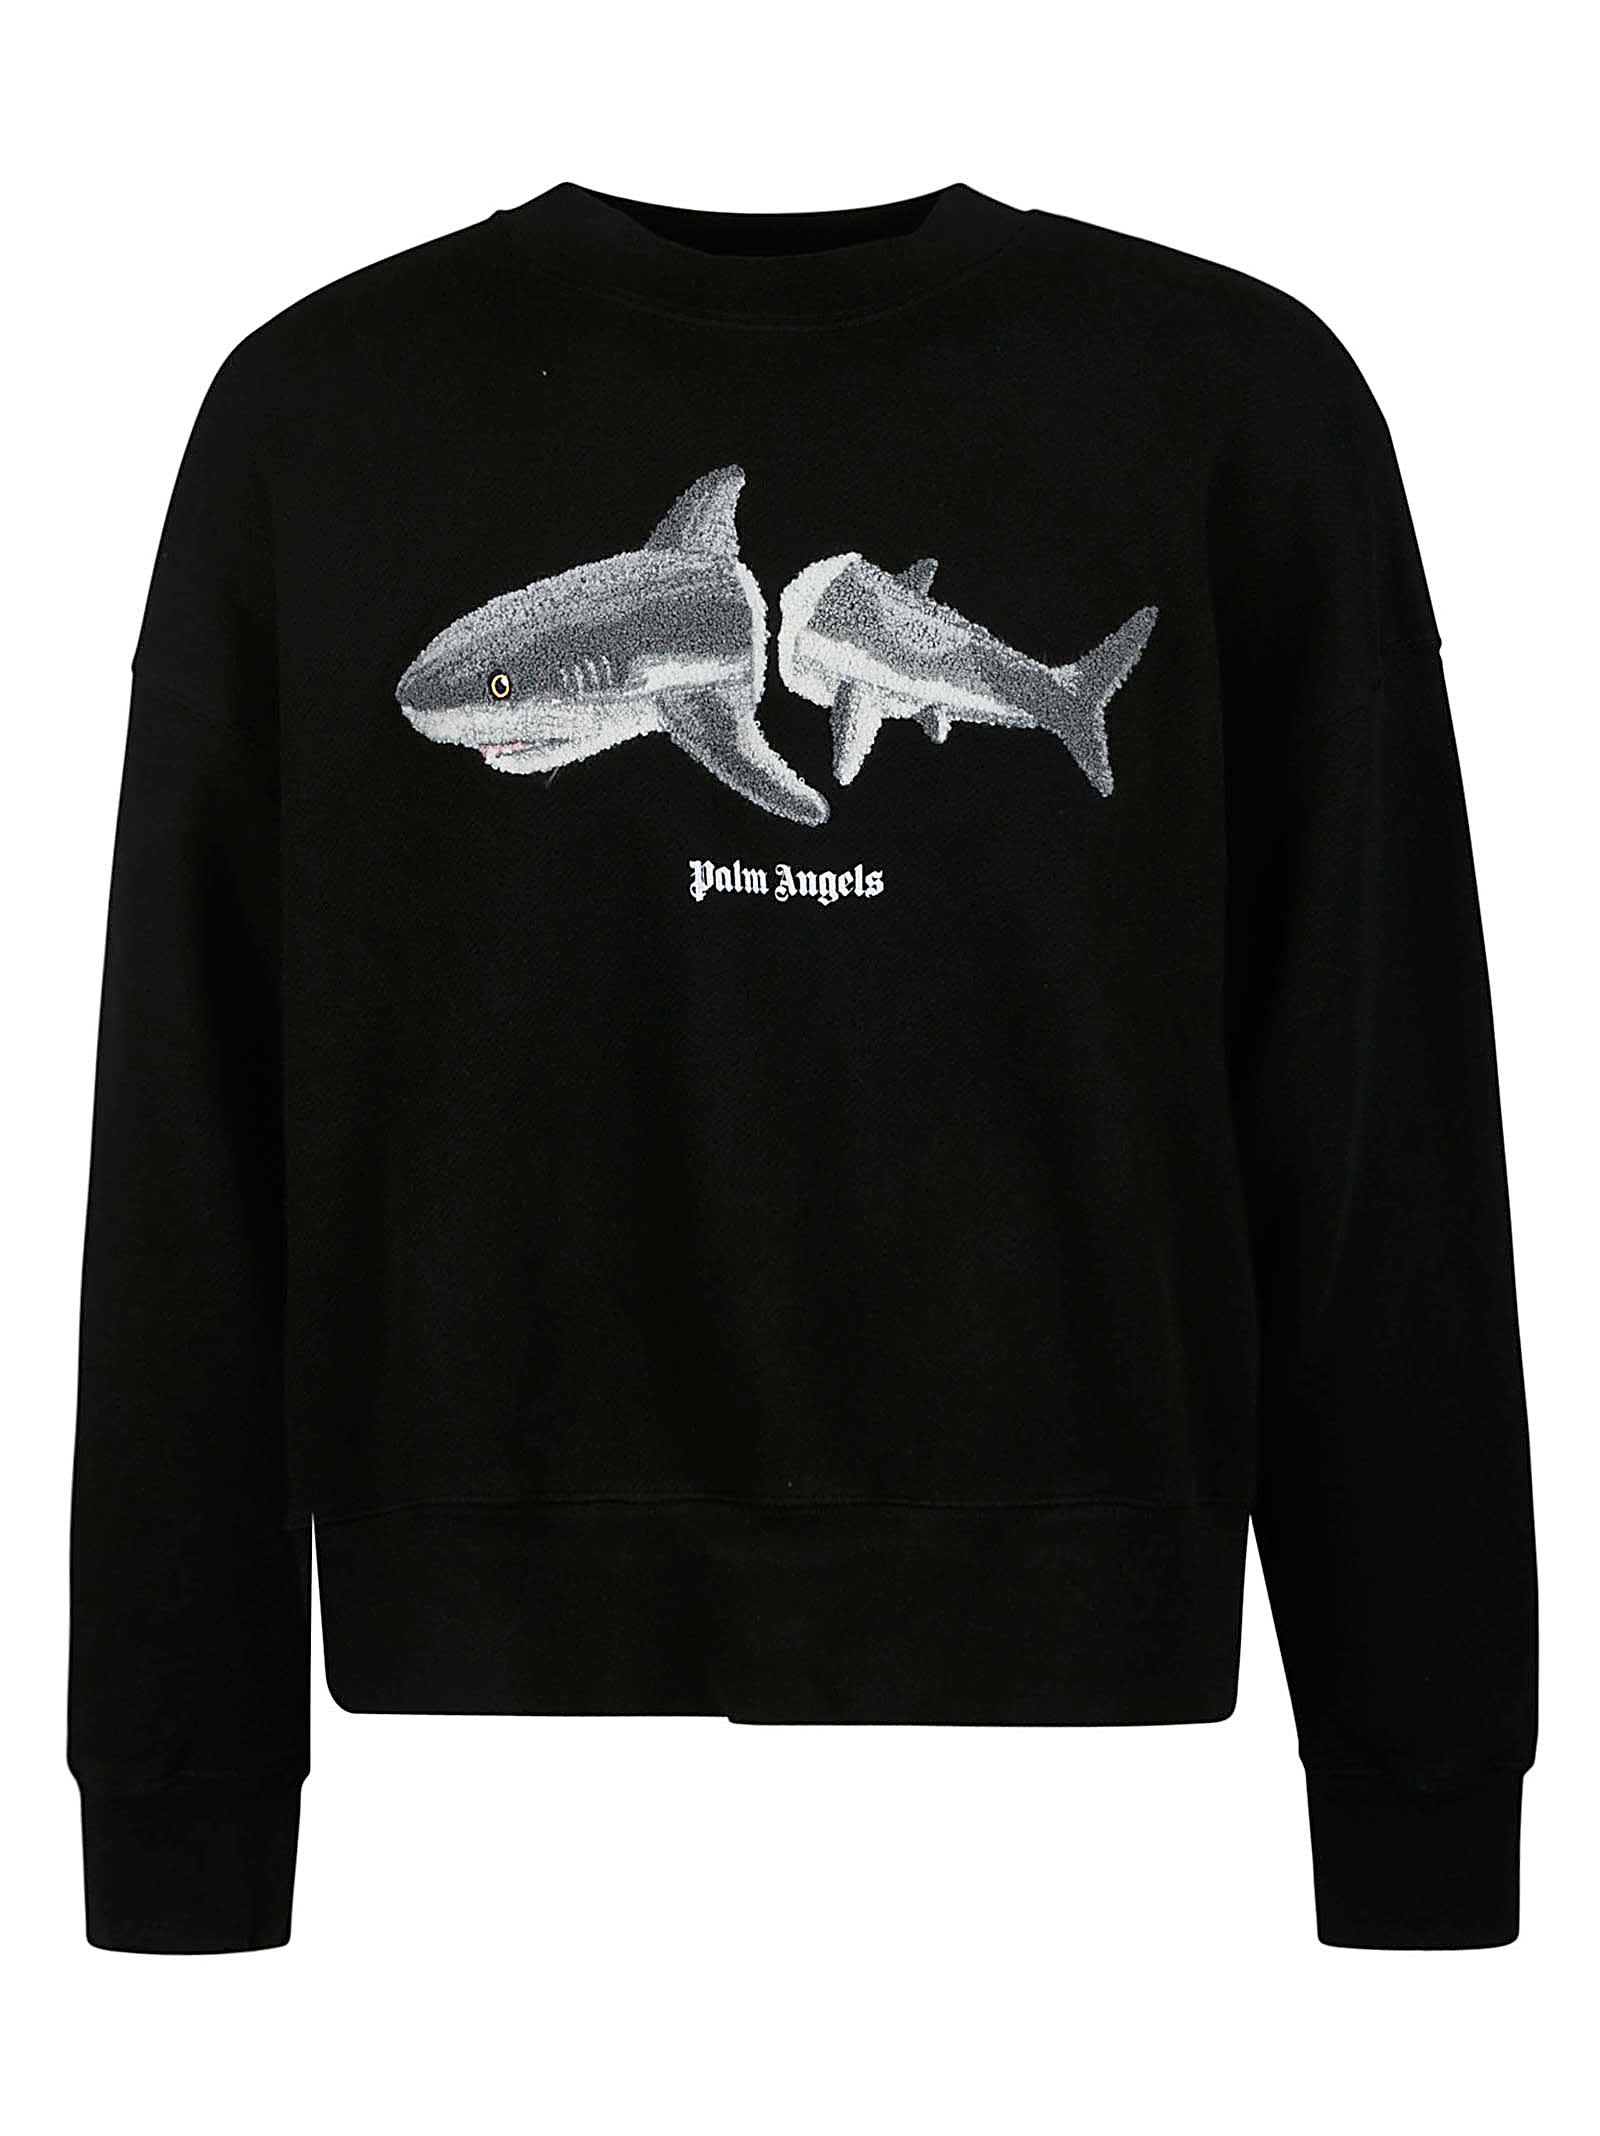 Palm Angels Shark Crewneck Sweatshirt